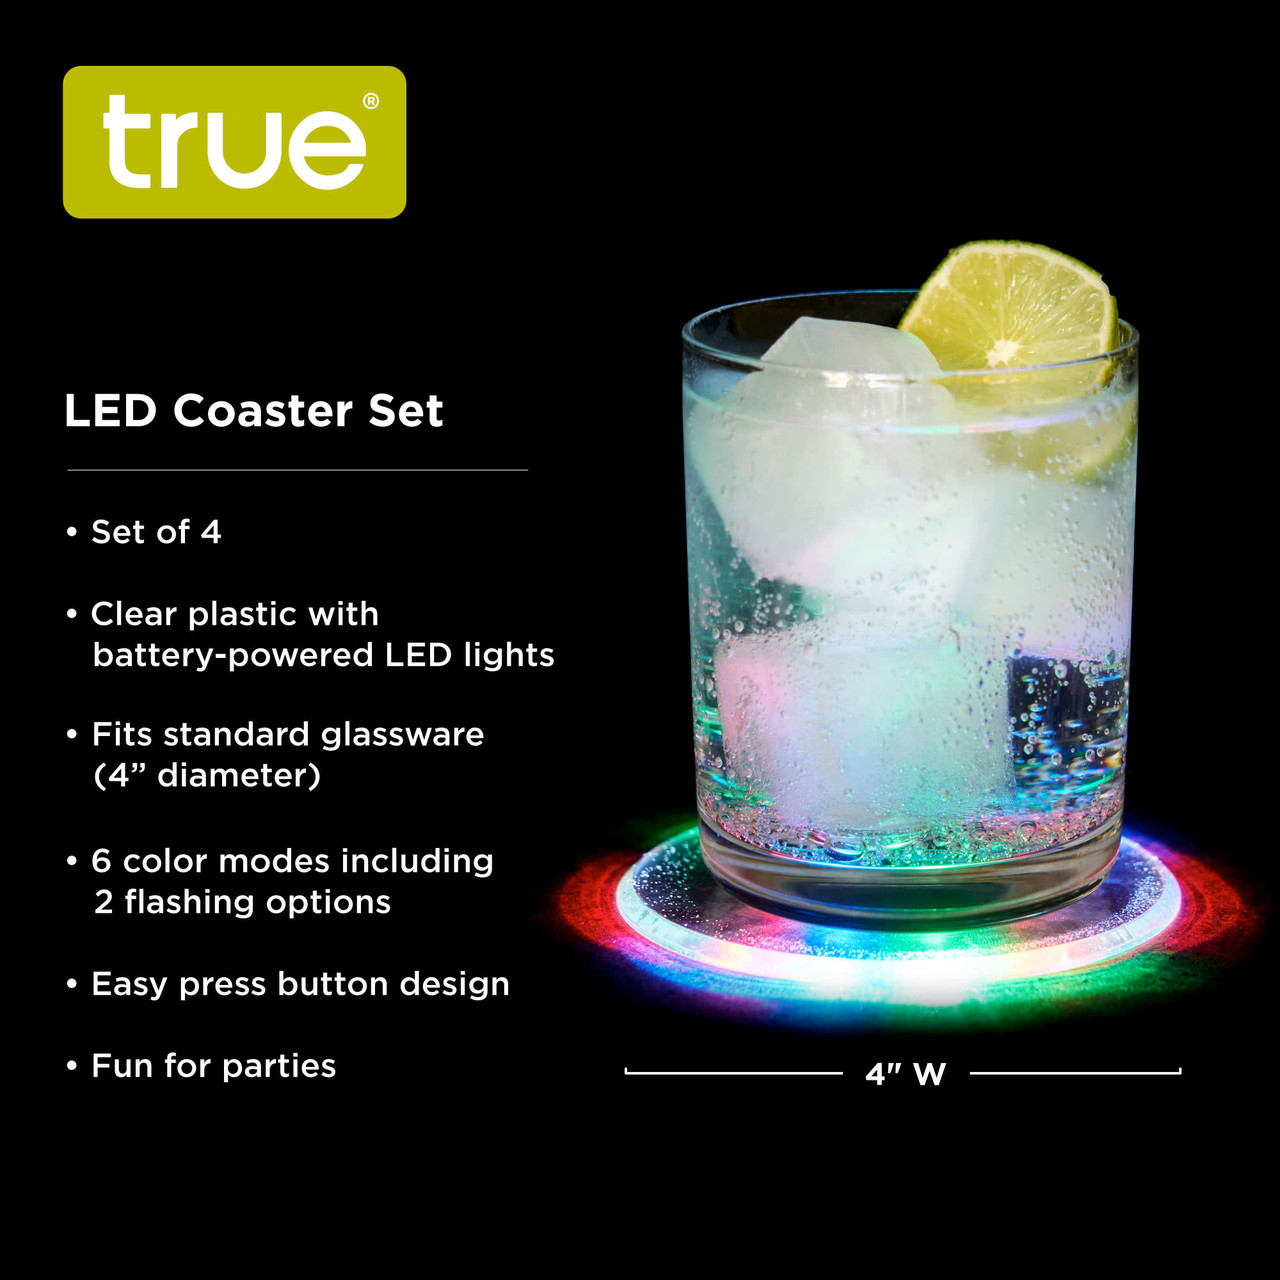 LED Coaster Set by True